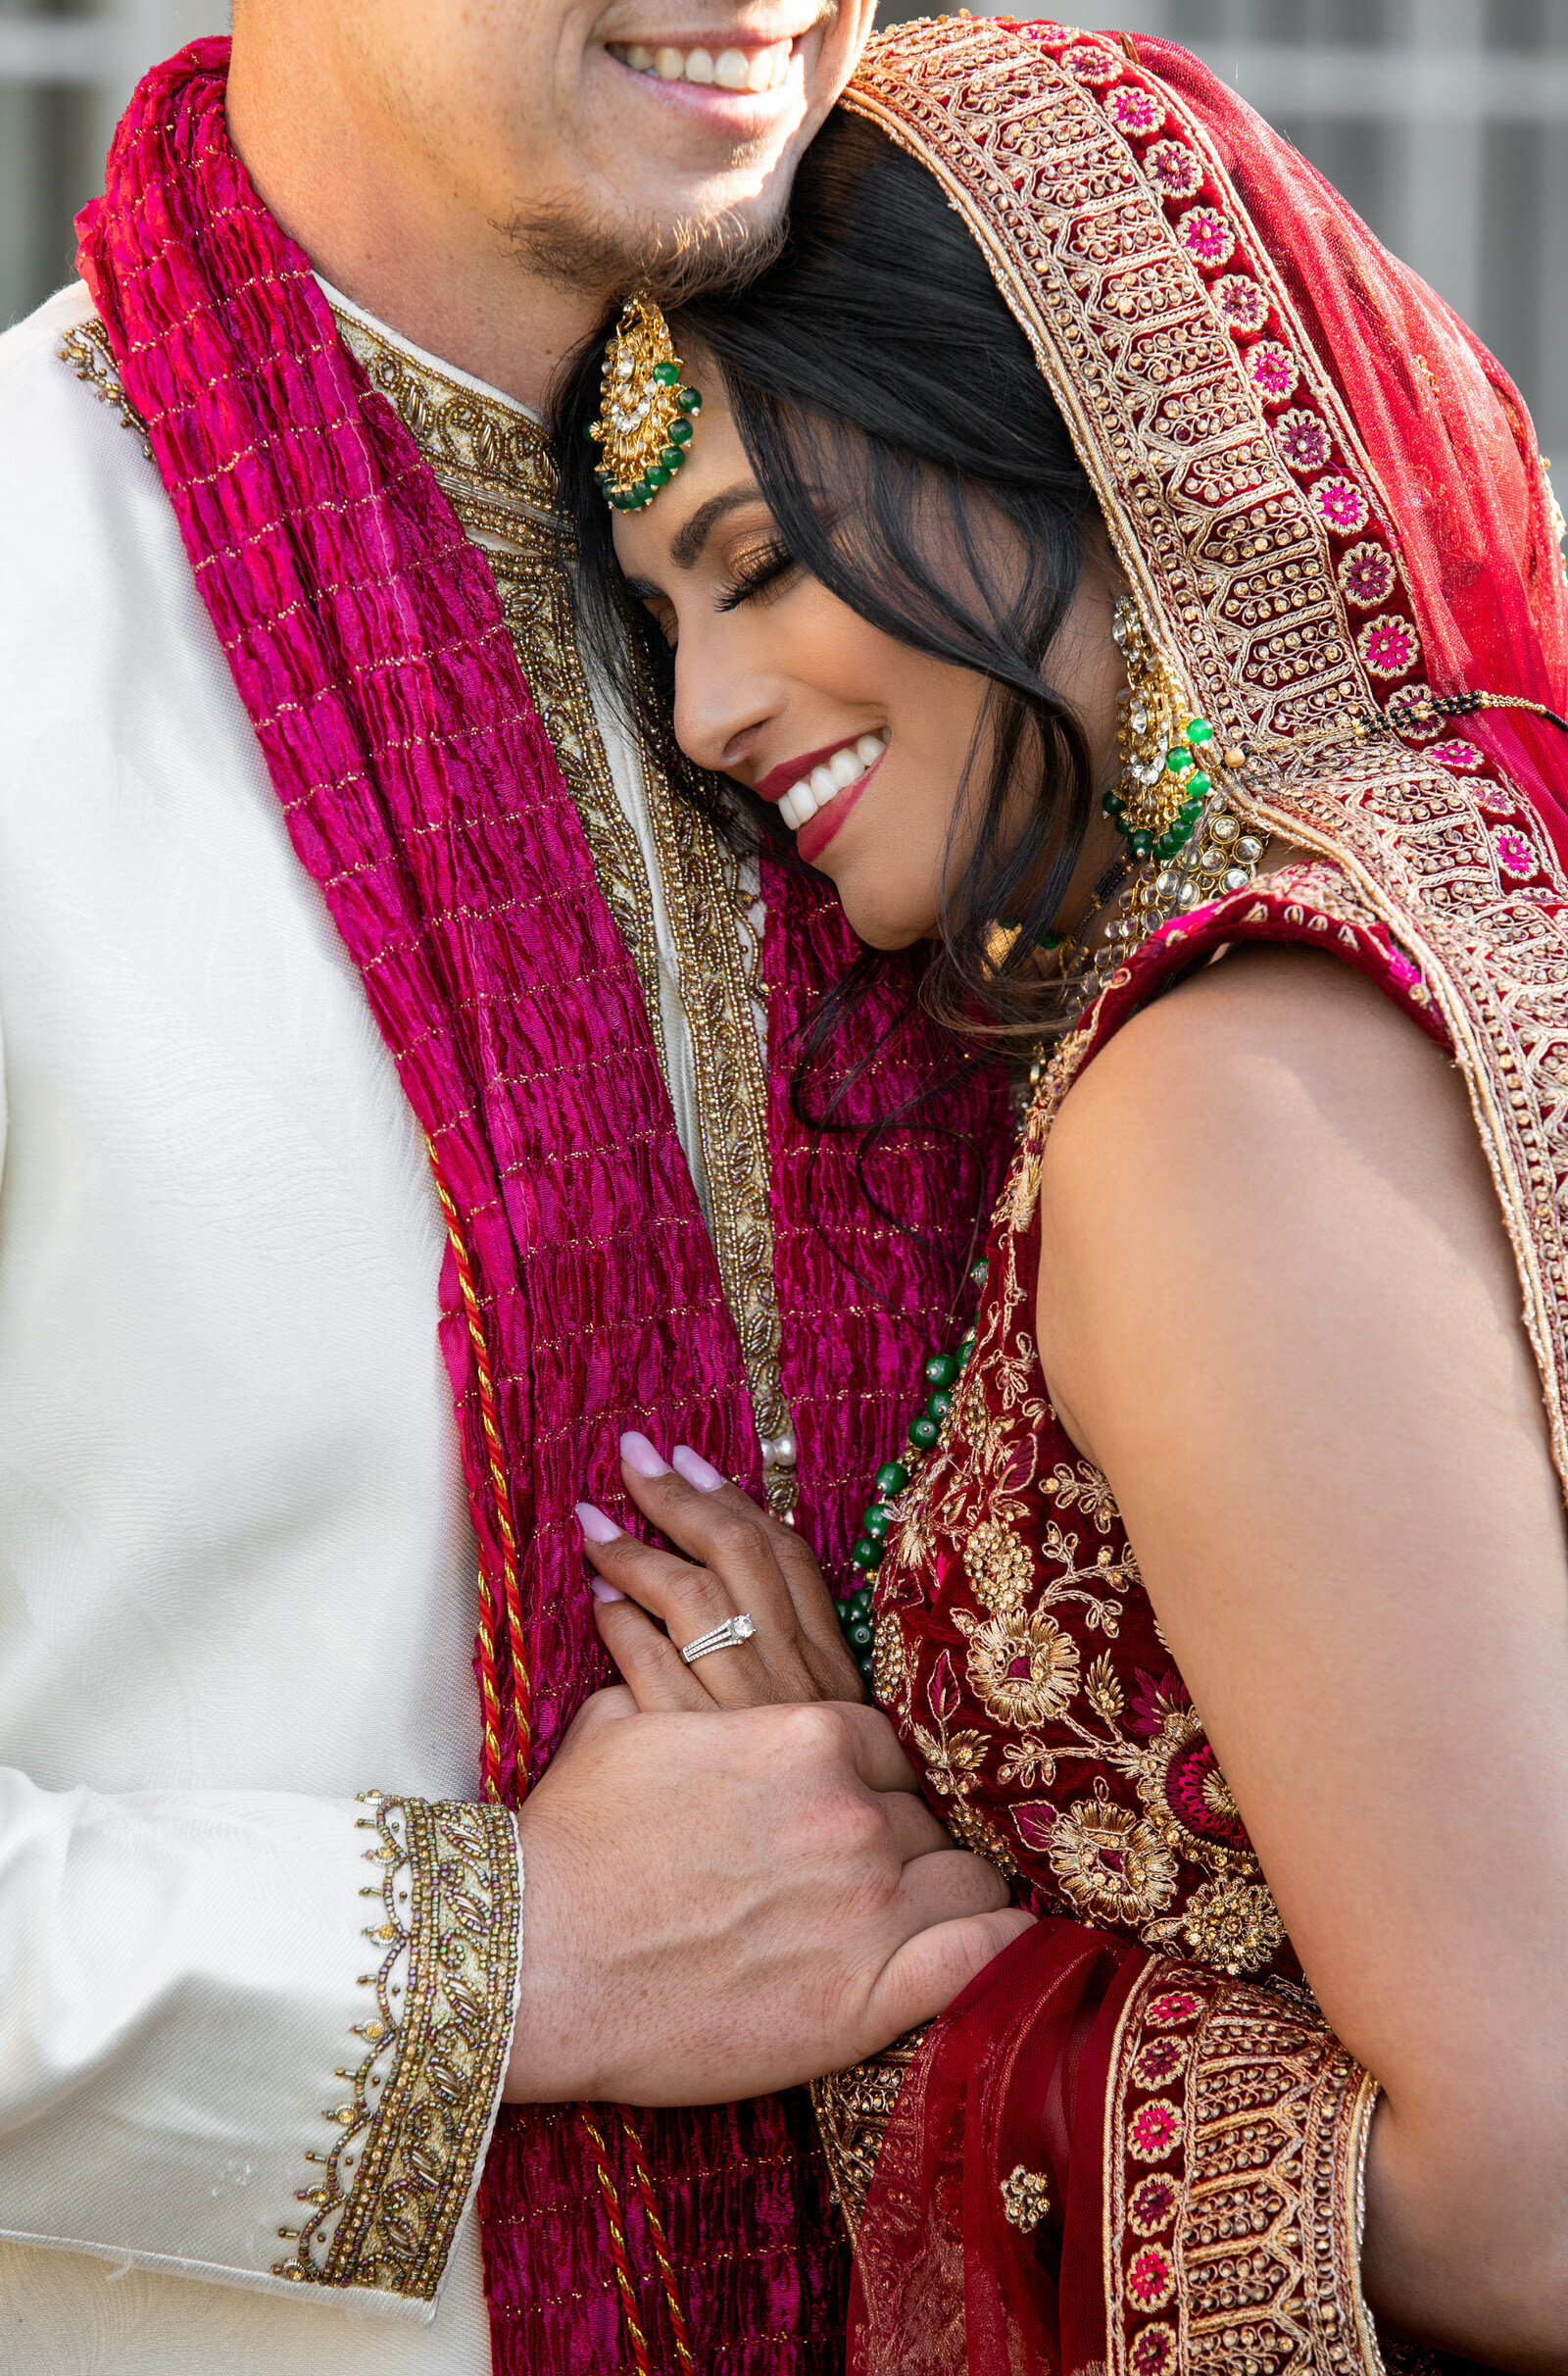 Indian Wedding Photographer in Detroit